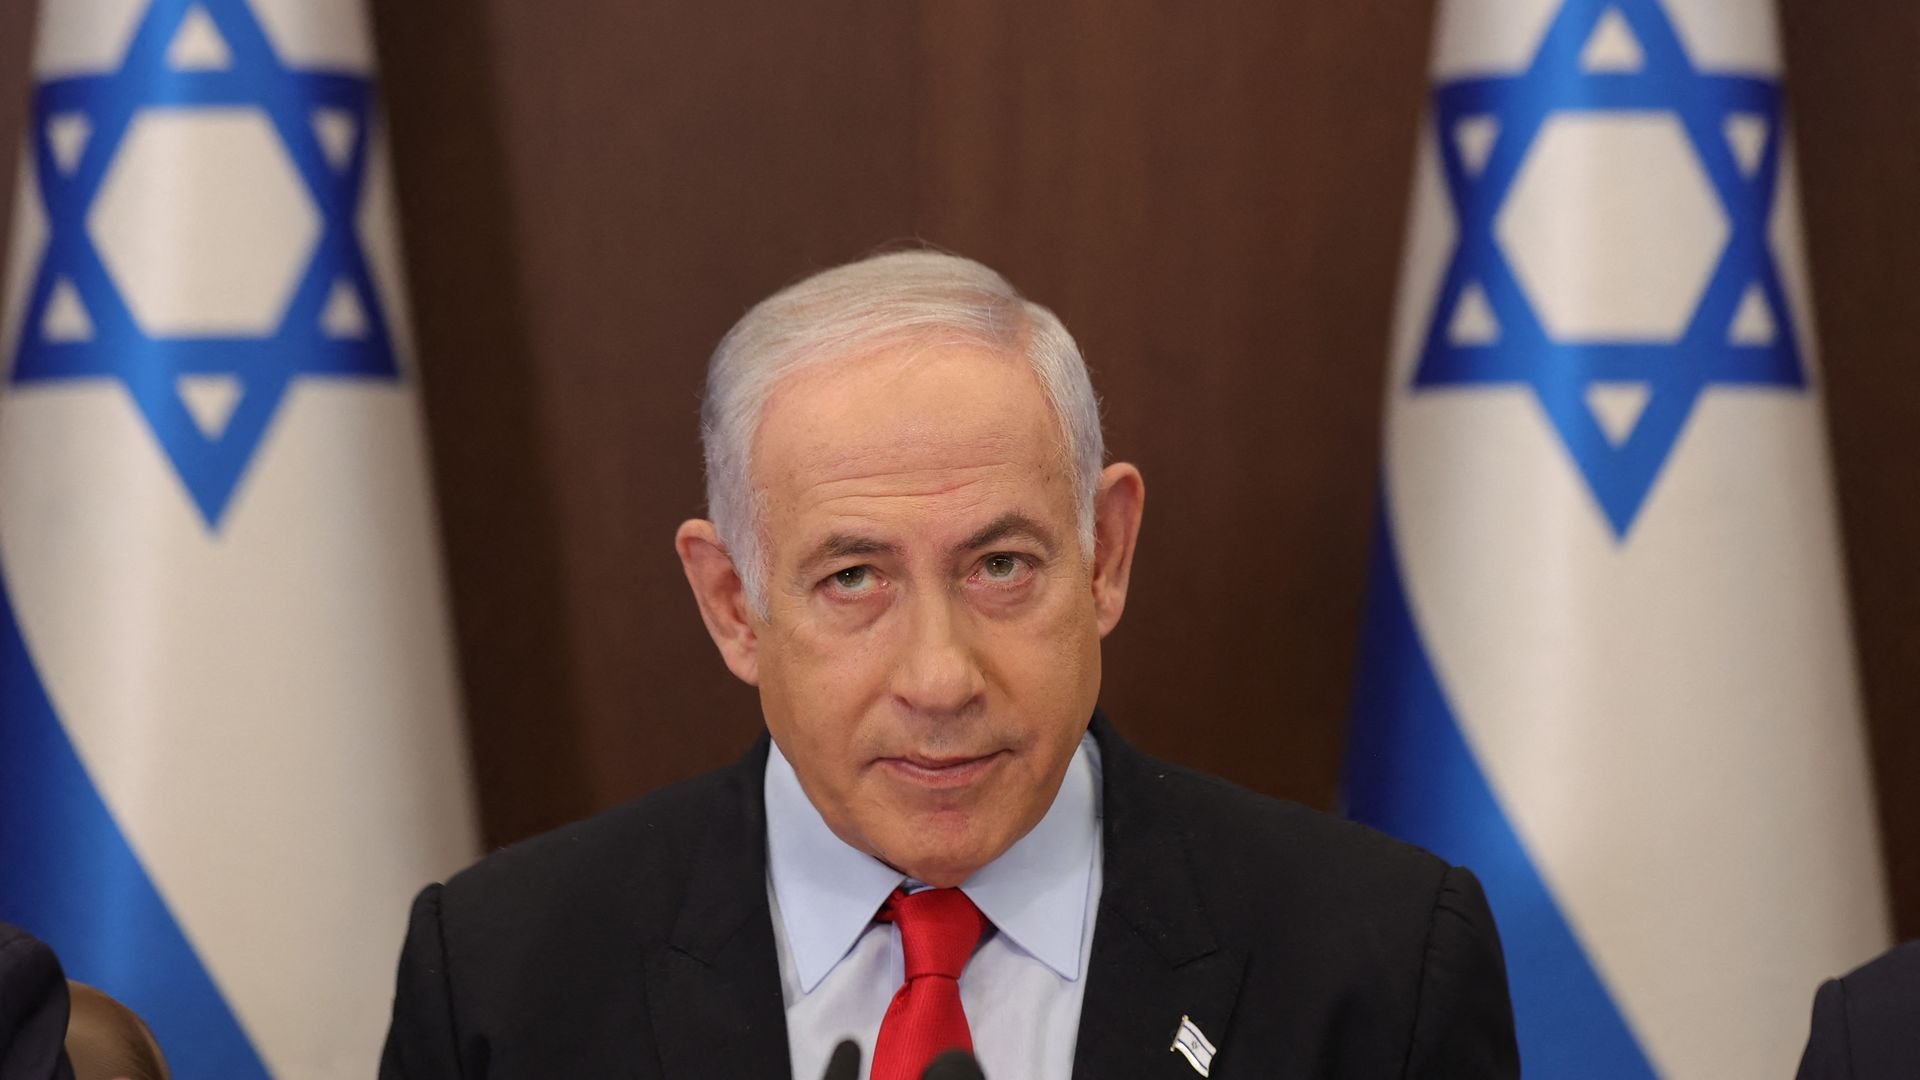 Netanyahu tells Biden: "Israel will win" in war against Hamas